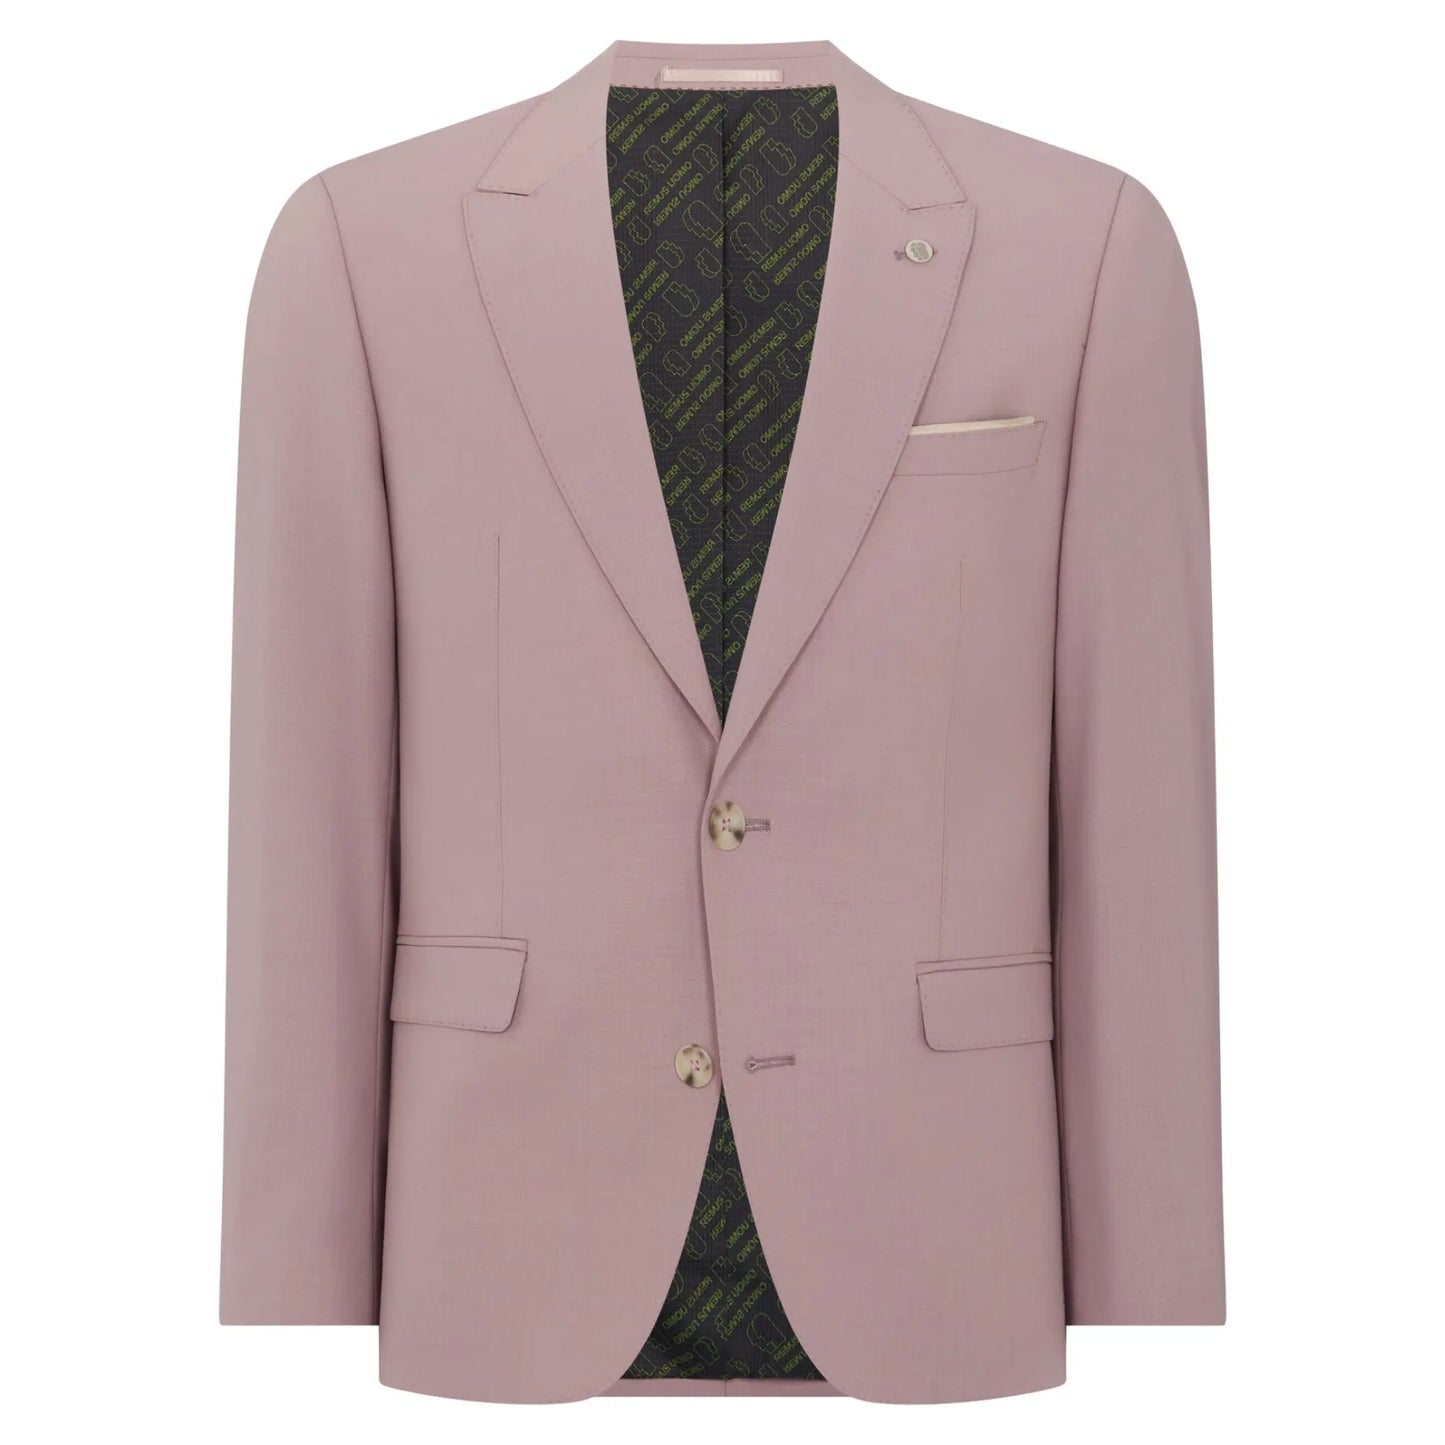 Buy Remus Uomo Massa Suit Jacket - Pink | Suit Jacketss at Woven Durham